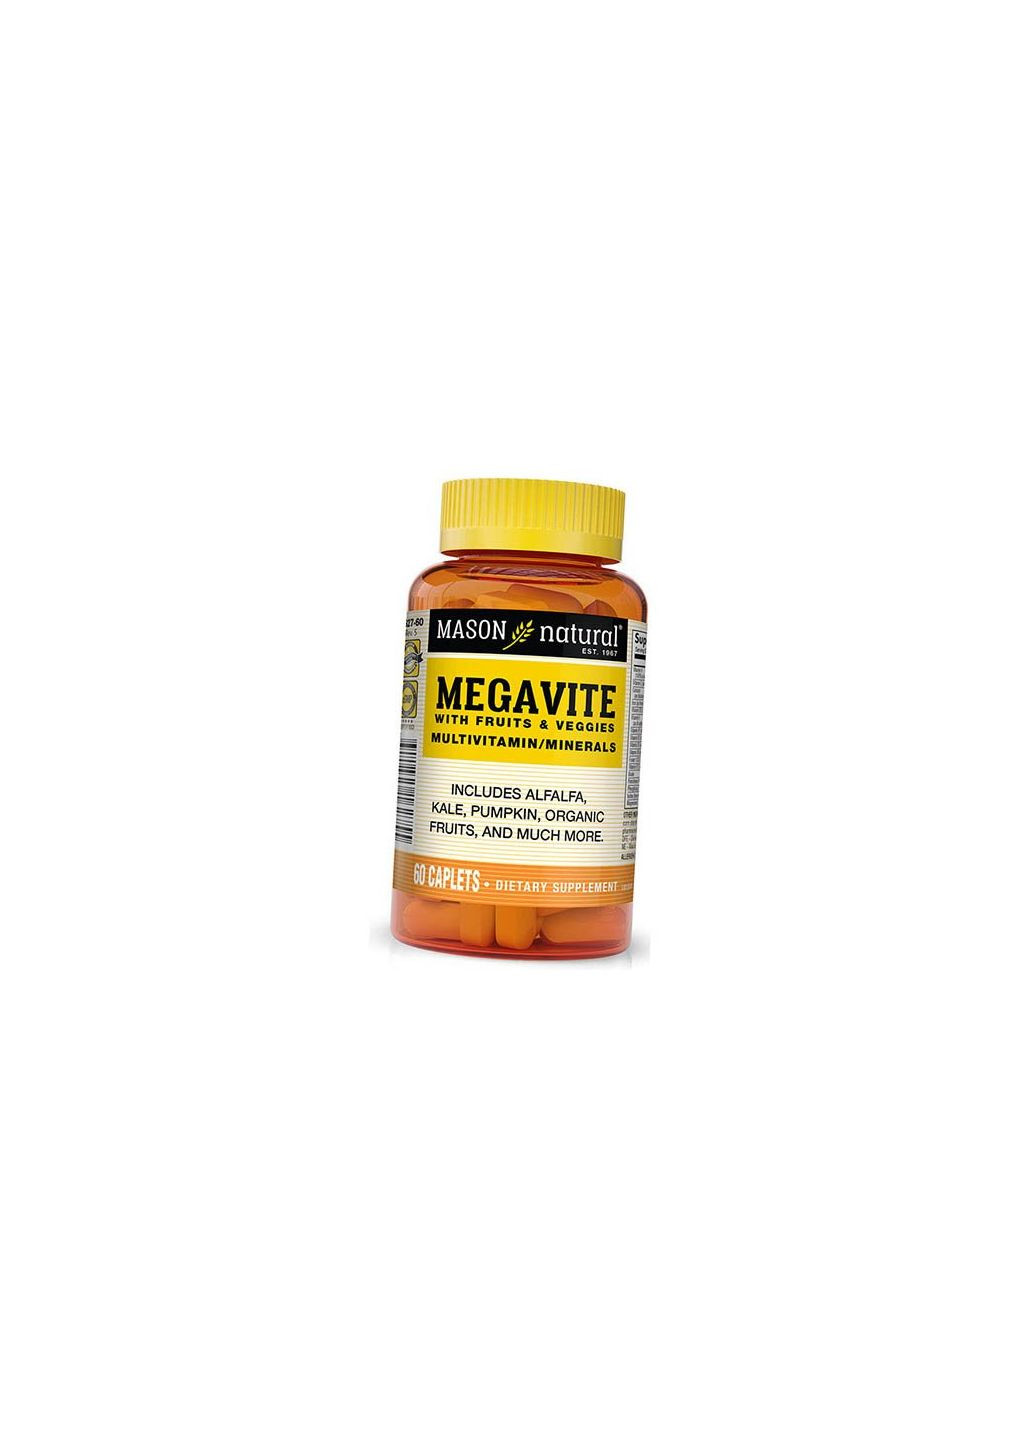 Megavite with Fruits & Veggies Multivitamin/Minerals 60каплет (36529018) Mason Natural (293255452)